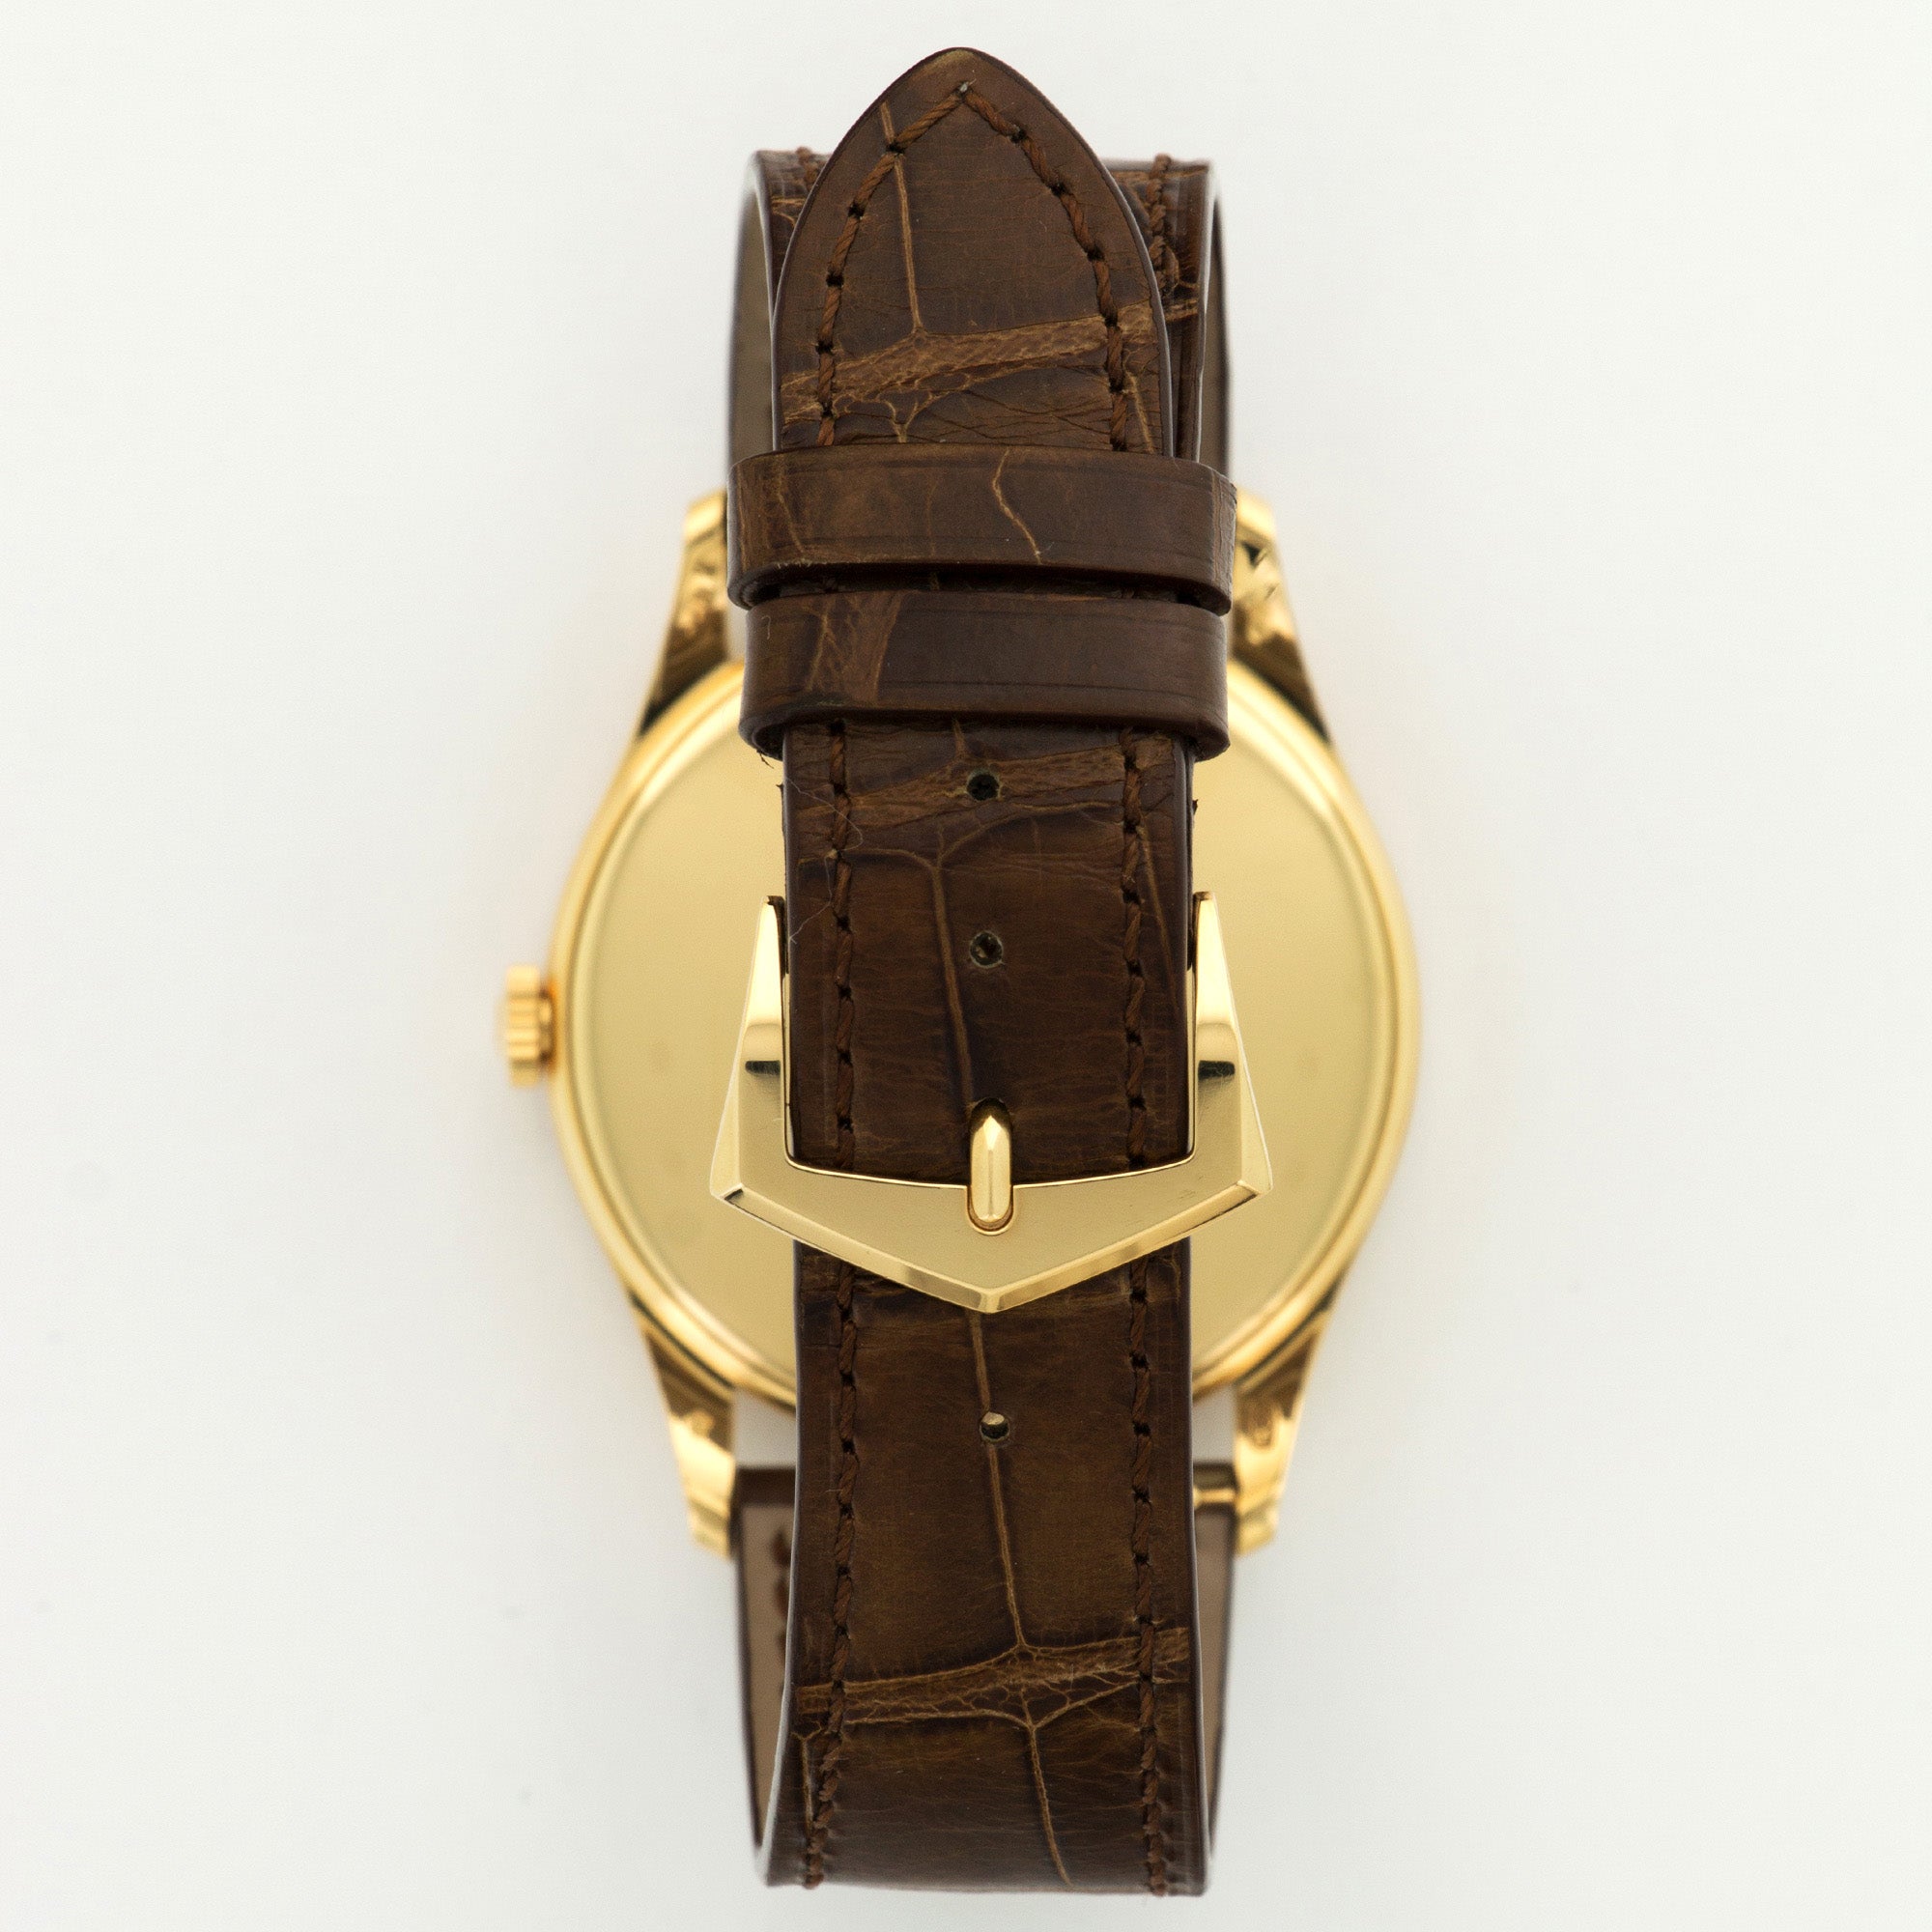 Patek Philippe - Patek Philippe Yellow Gold Calatrava Watch Ref. 5196J - The Keystone Watches